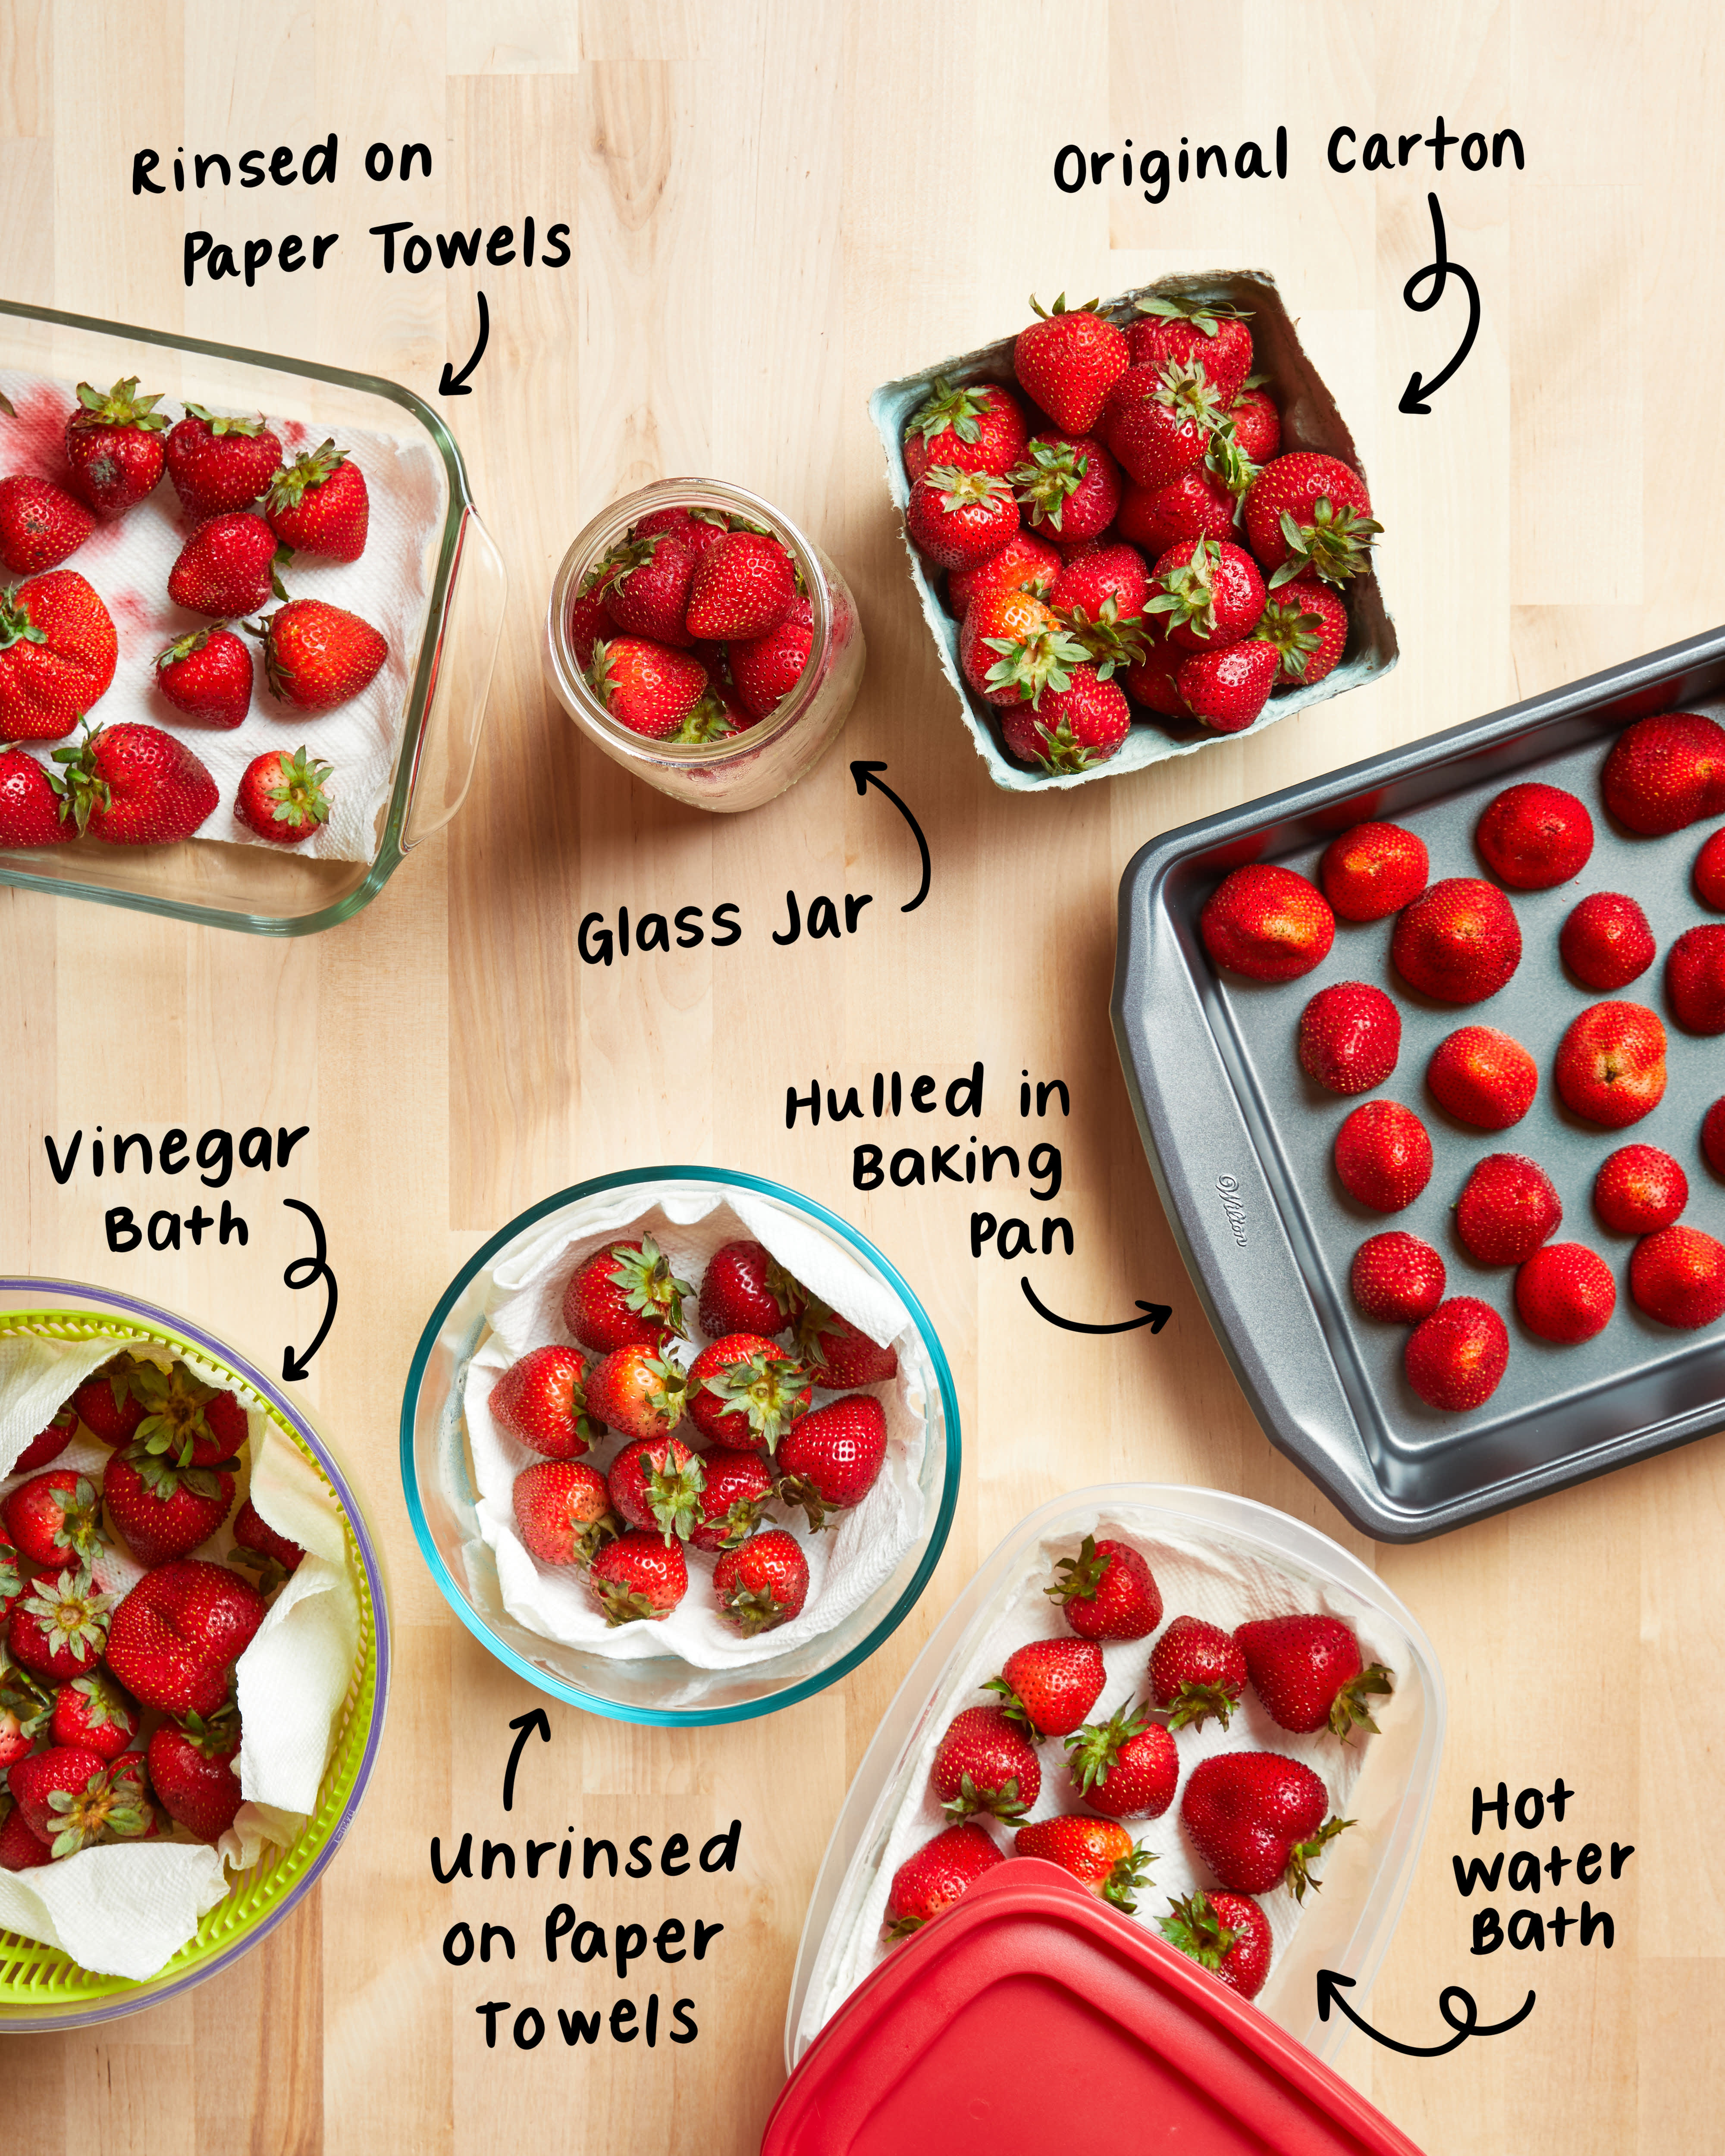 https://cdn.apartmenttherapy.info/image/upload/v1594145490/k/Photo/Series/2020-06-skills-showdown-storing-berries/berry-skills-inpost.jpg